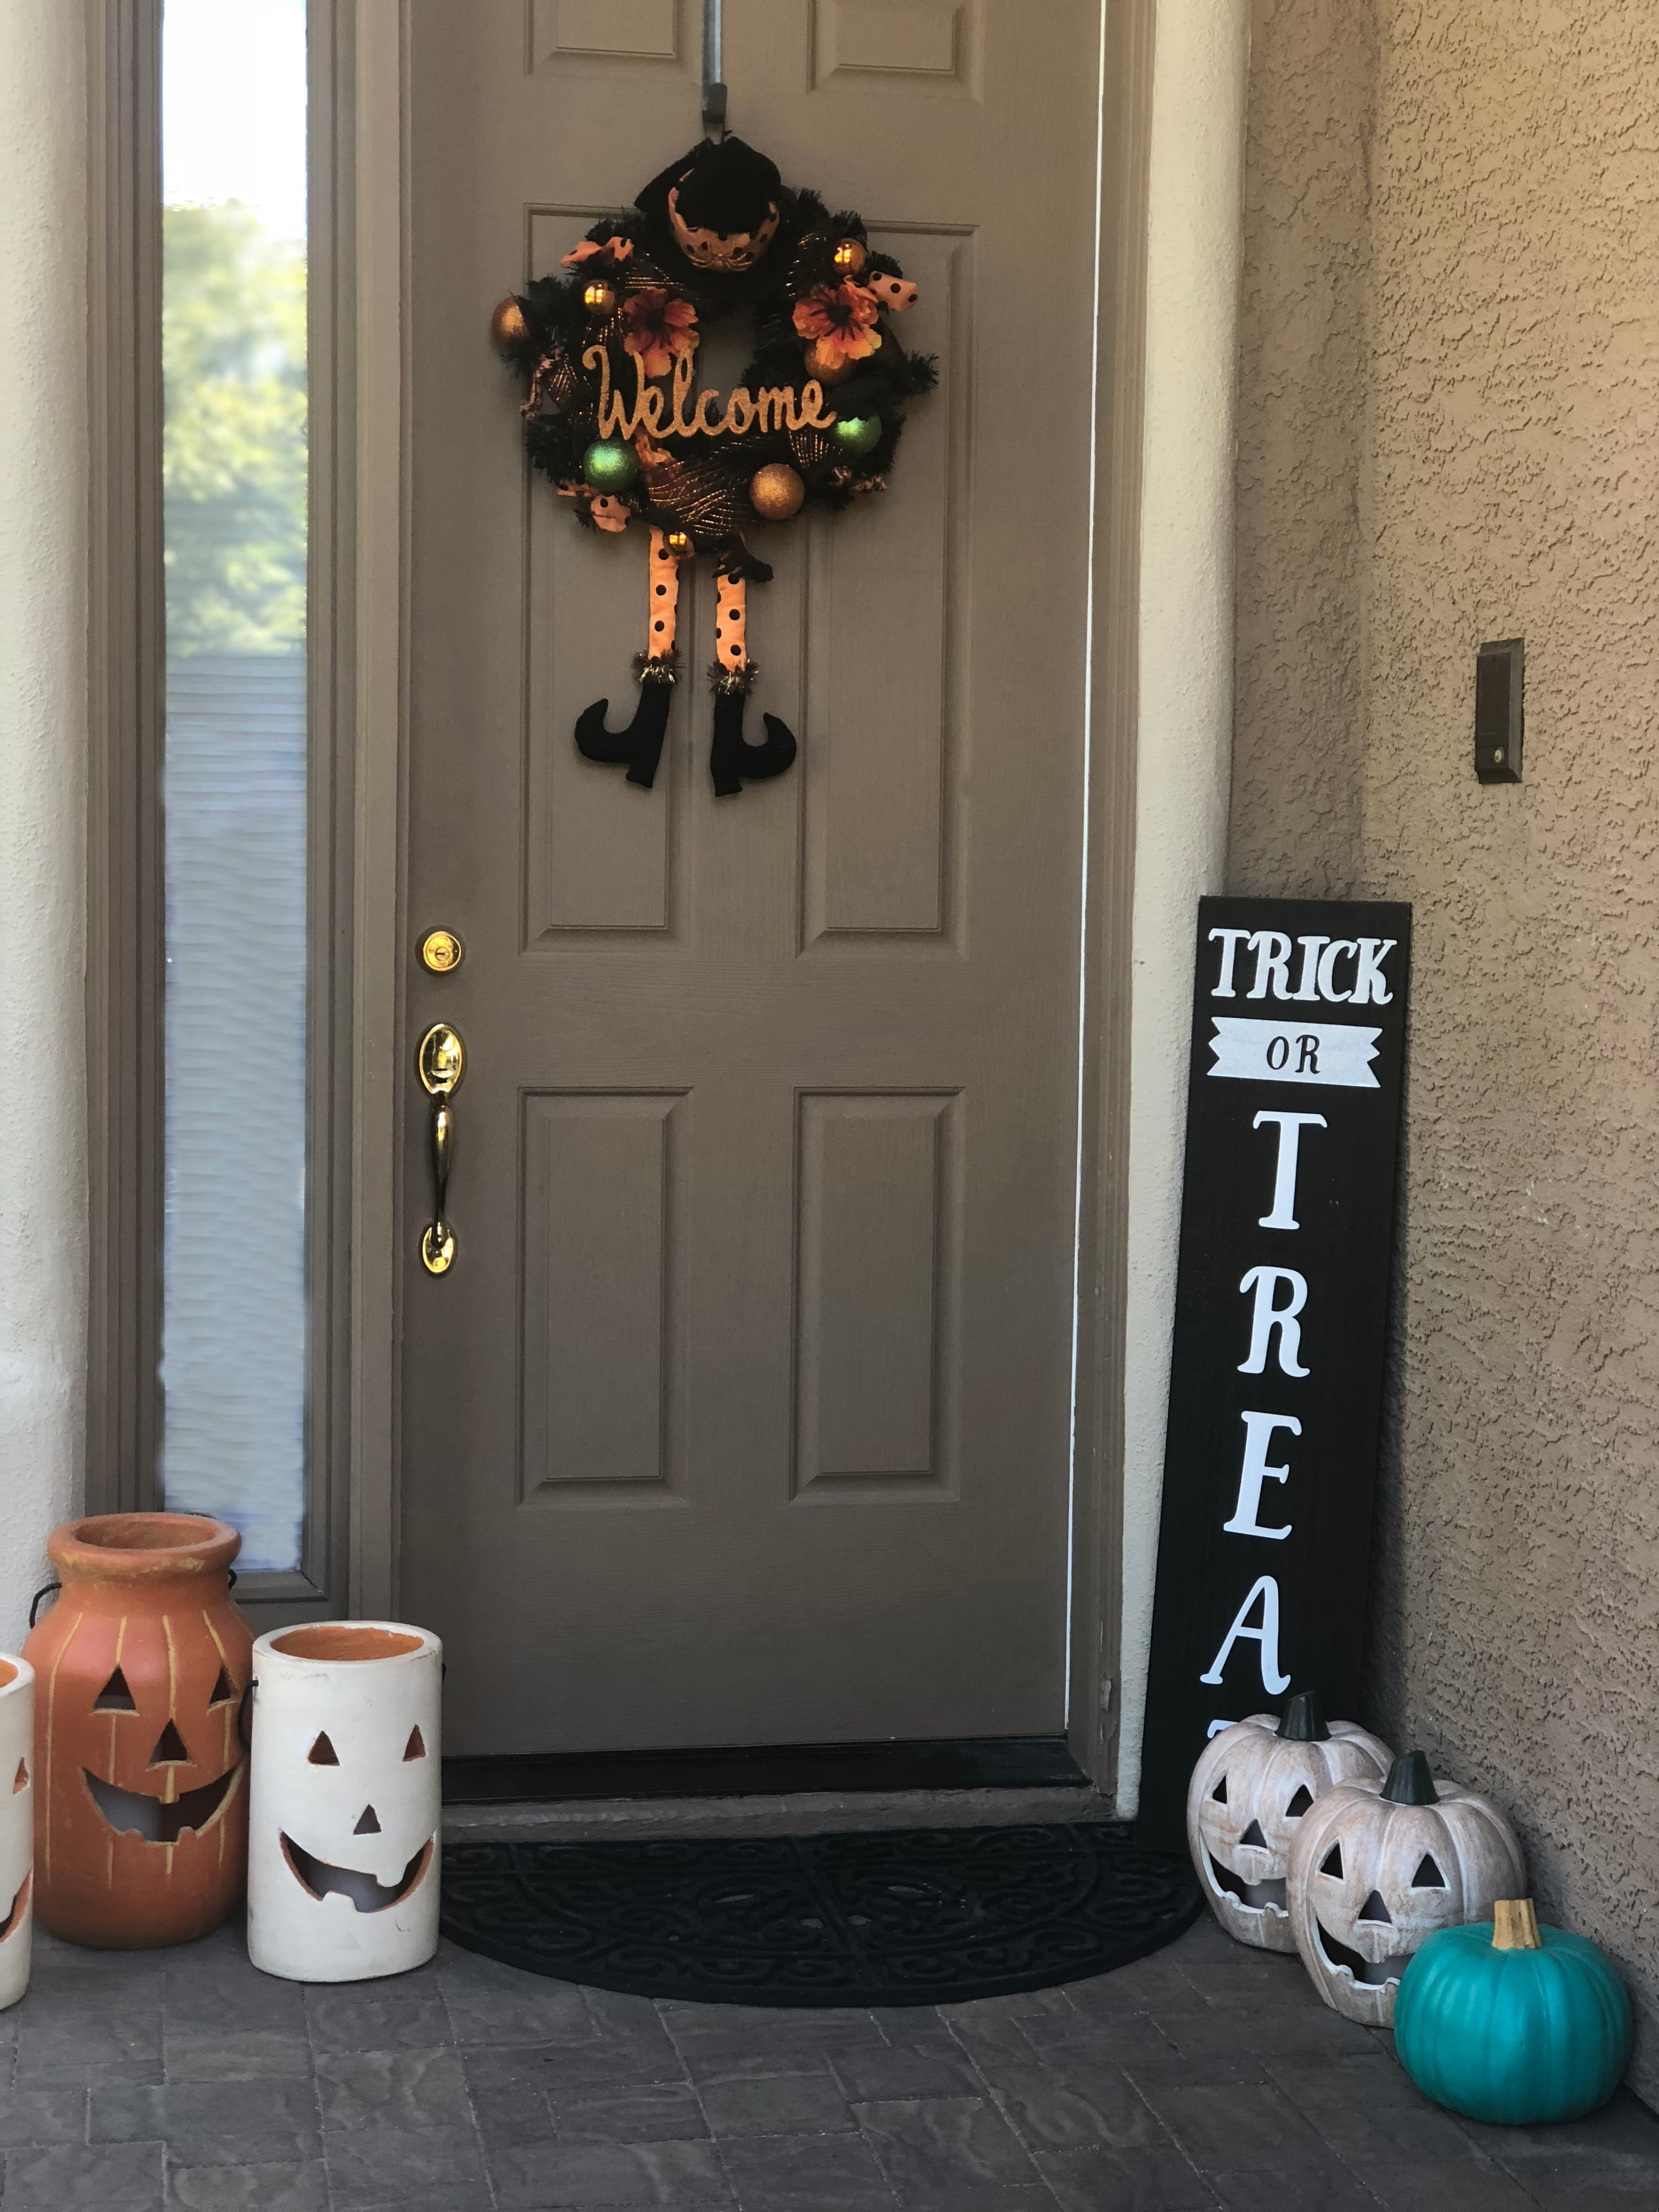 How to Have a Peanut Free Halloween | Teal Pumpkin Door Step